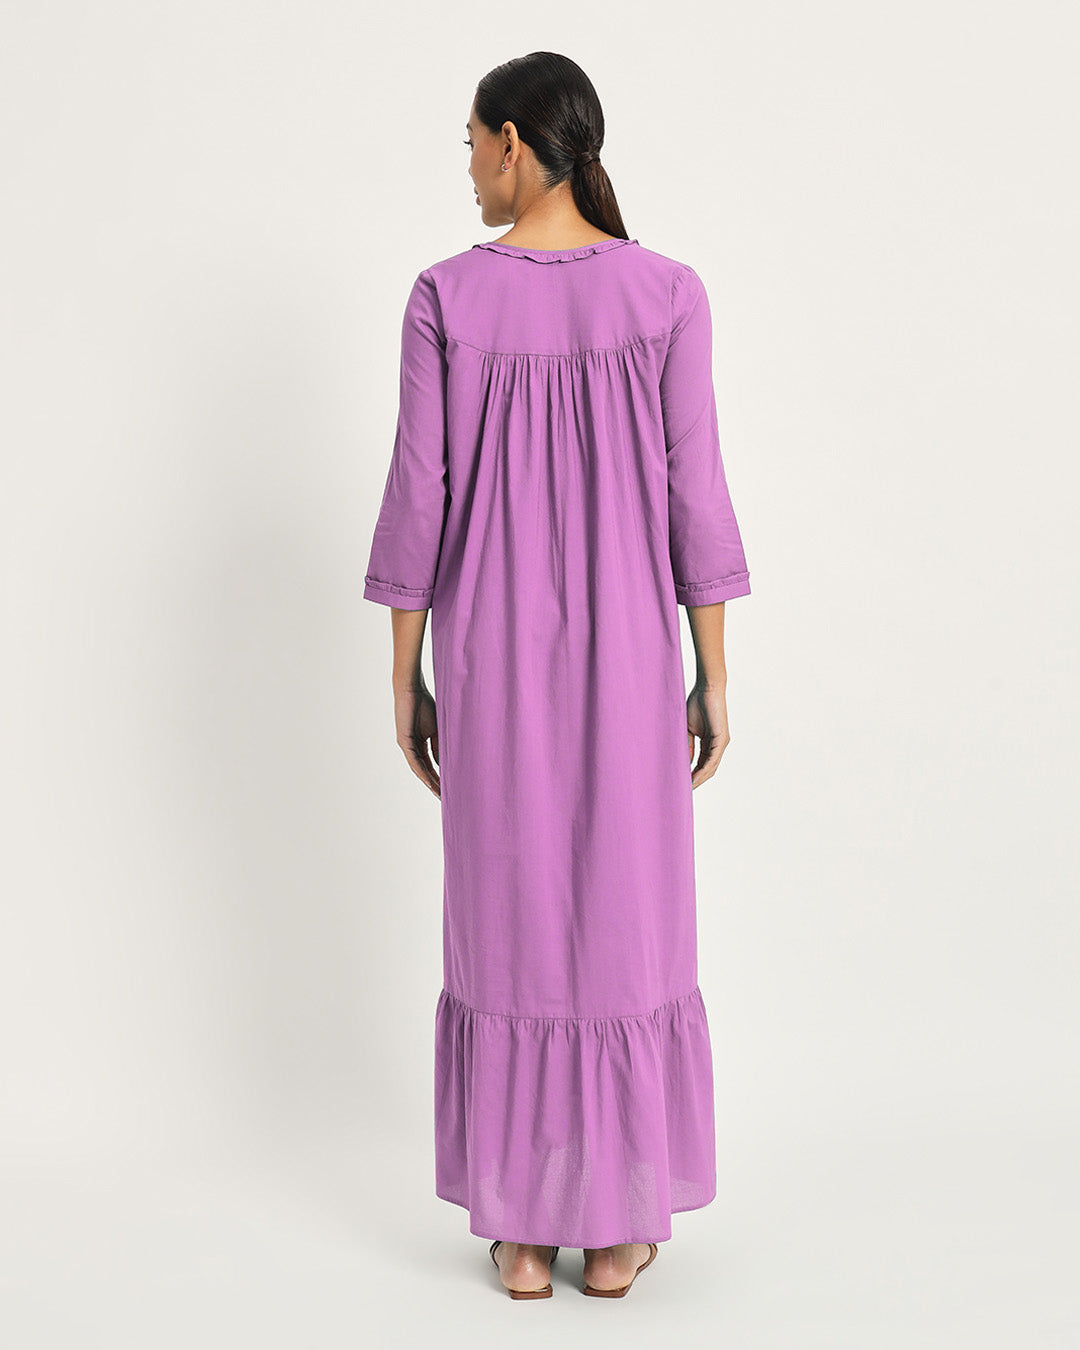 Combo: Iris Pink & Wisteria Purple Cloud Nine Nightdress